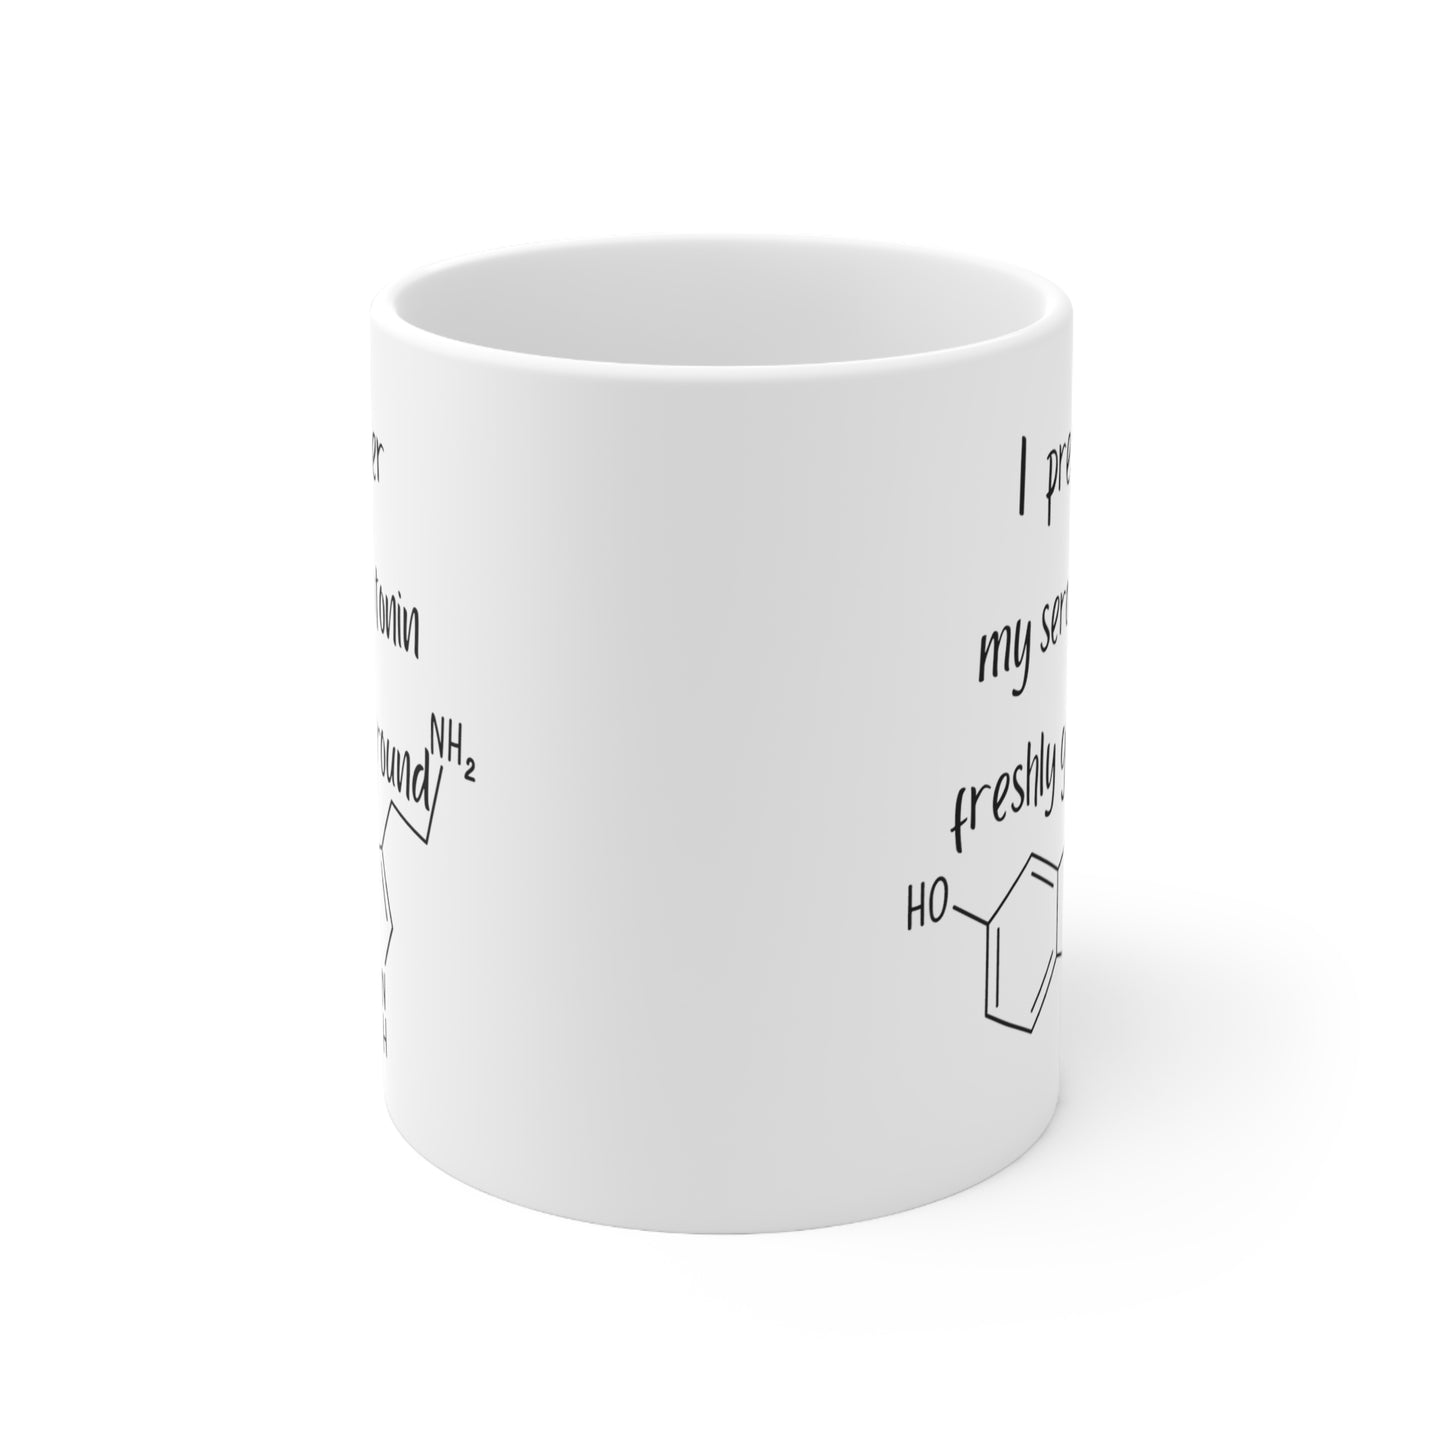 Serotonin Freshly Ground mug